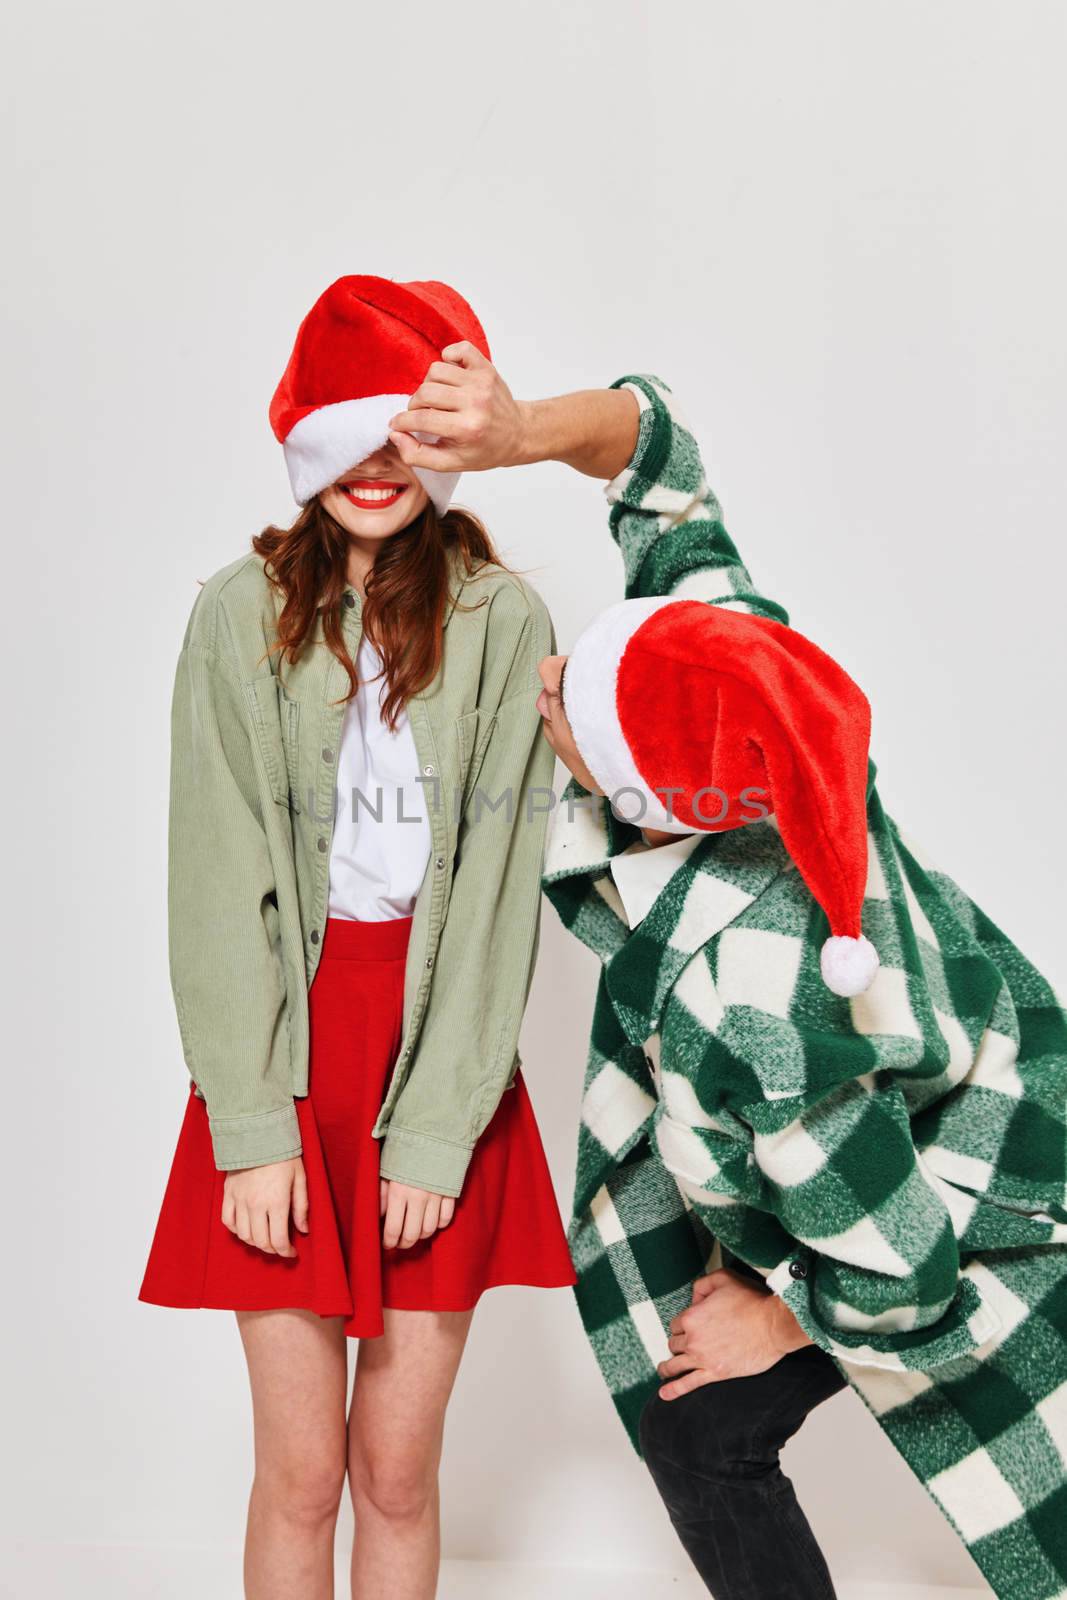 Man and woman festive mood fun friendship fashion by SHOTPRIME